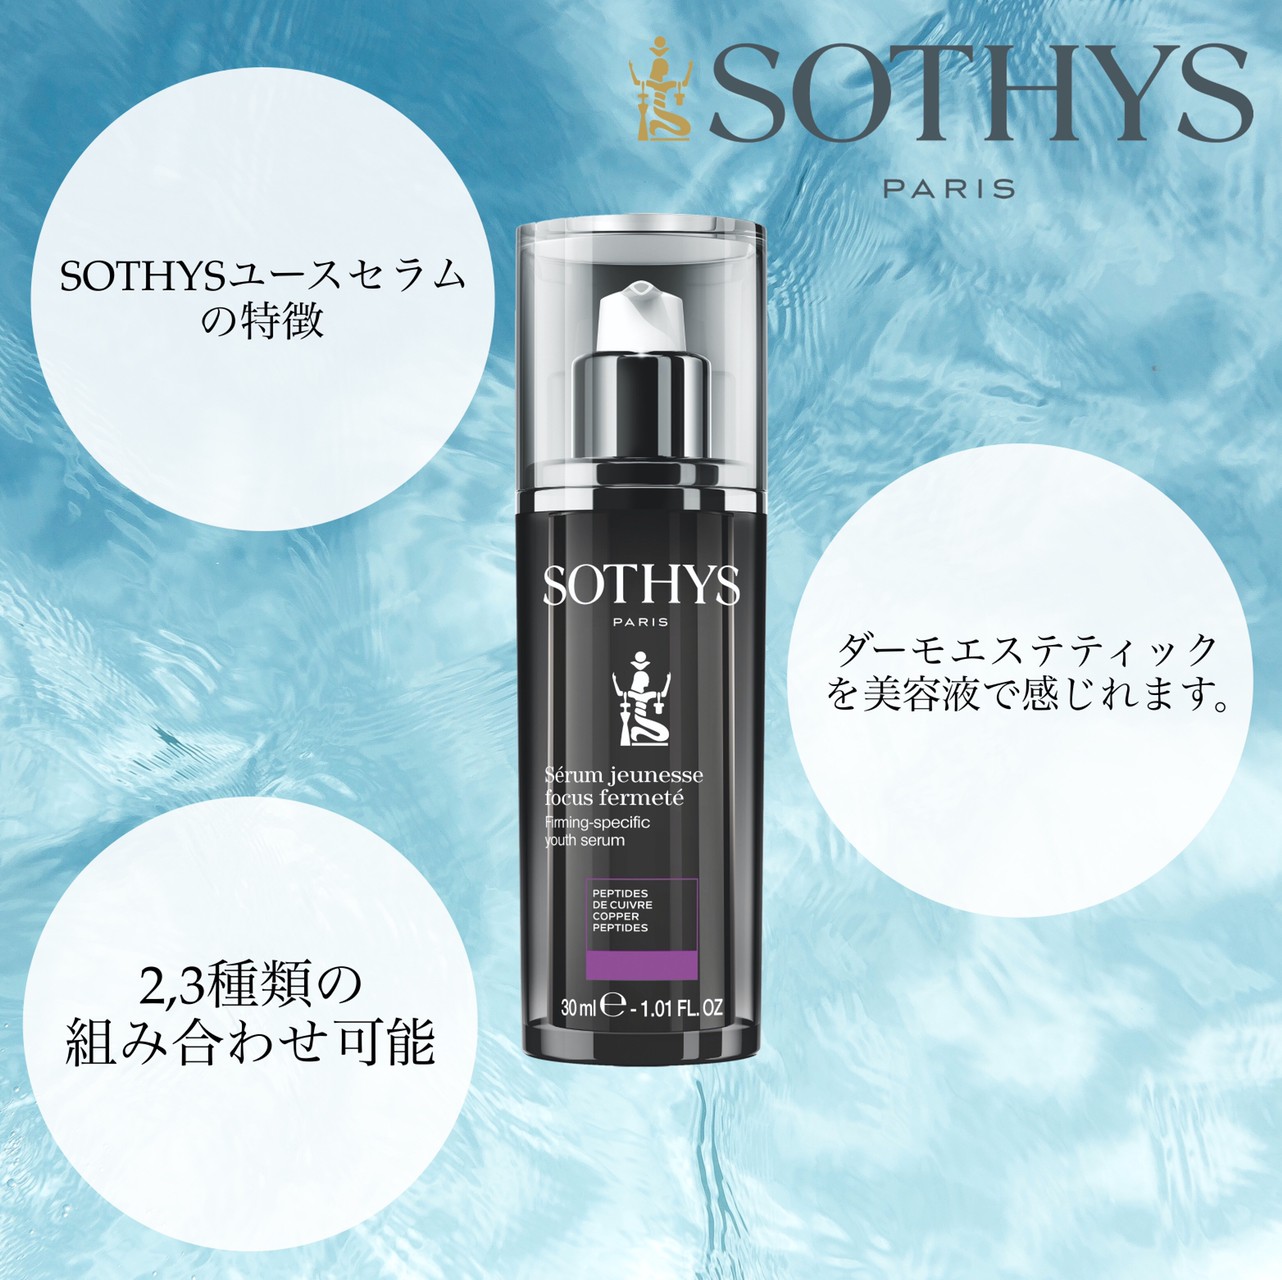 SOTHYS（ソティス）公式 (@JapanSothys) / Twitter